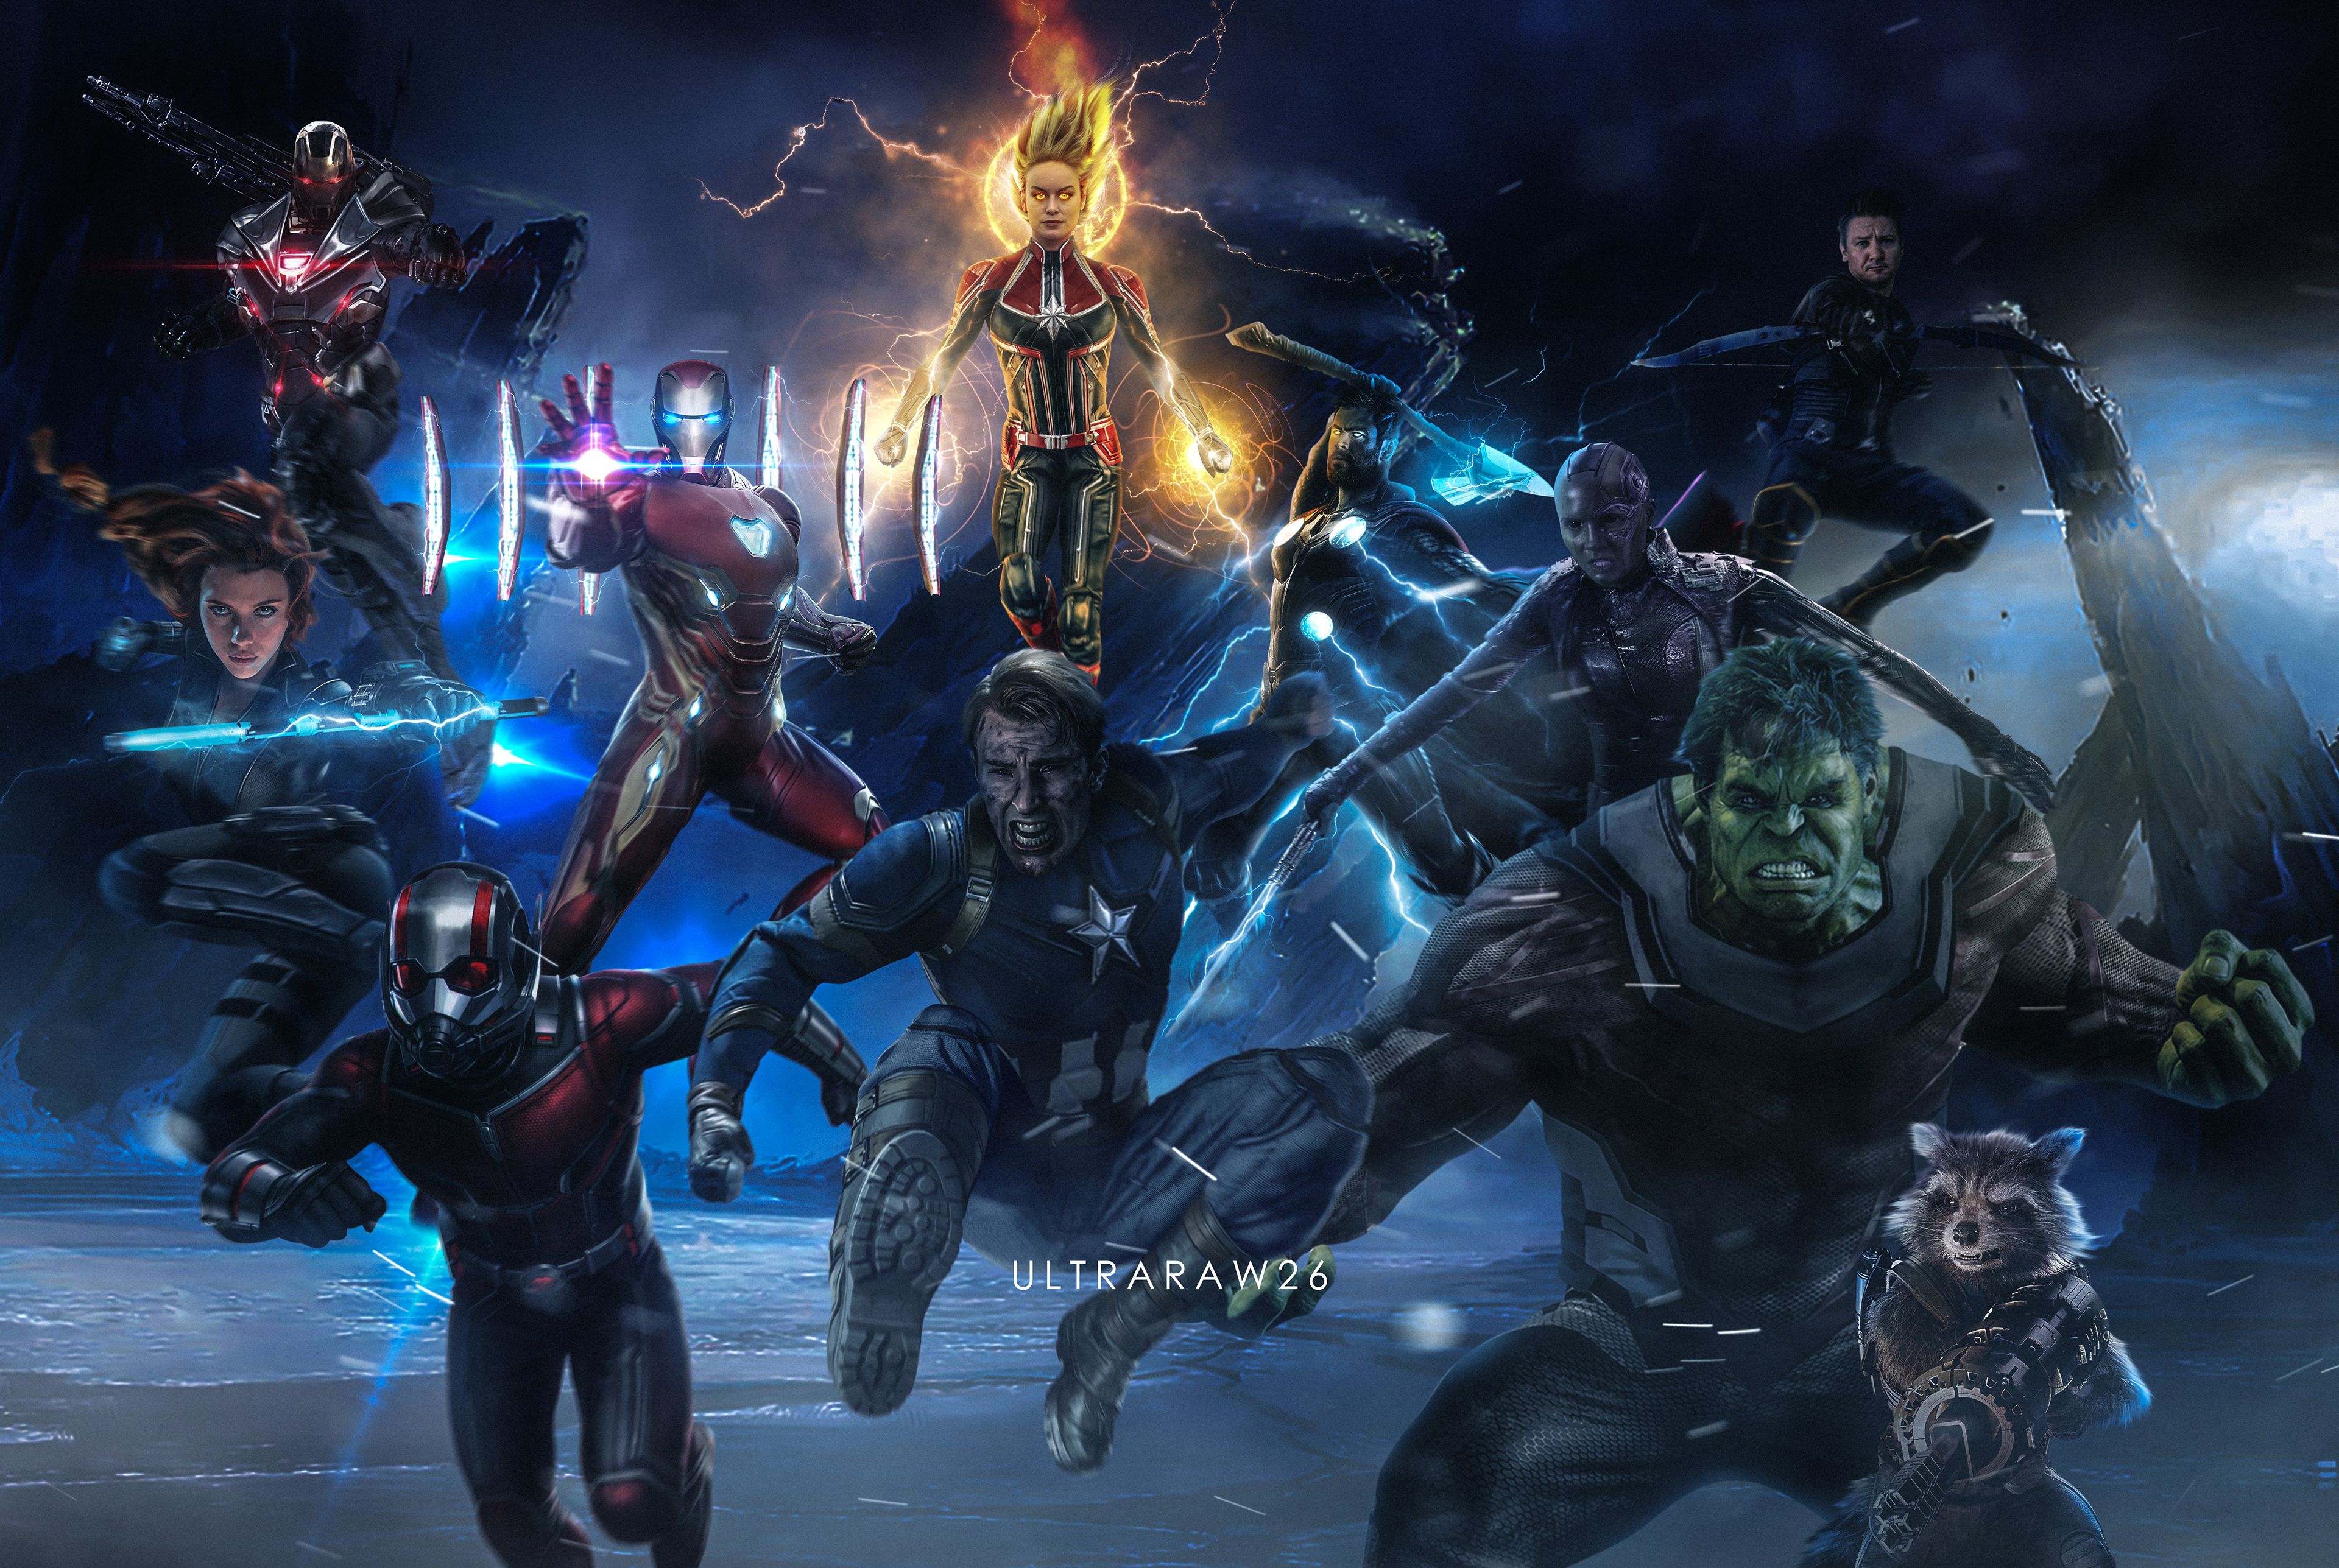 Wallpaper 4k Avengers Annihilation 2019 4k 2019 movies wallpaper